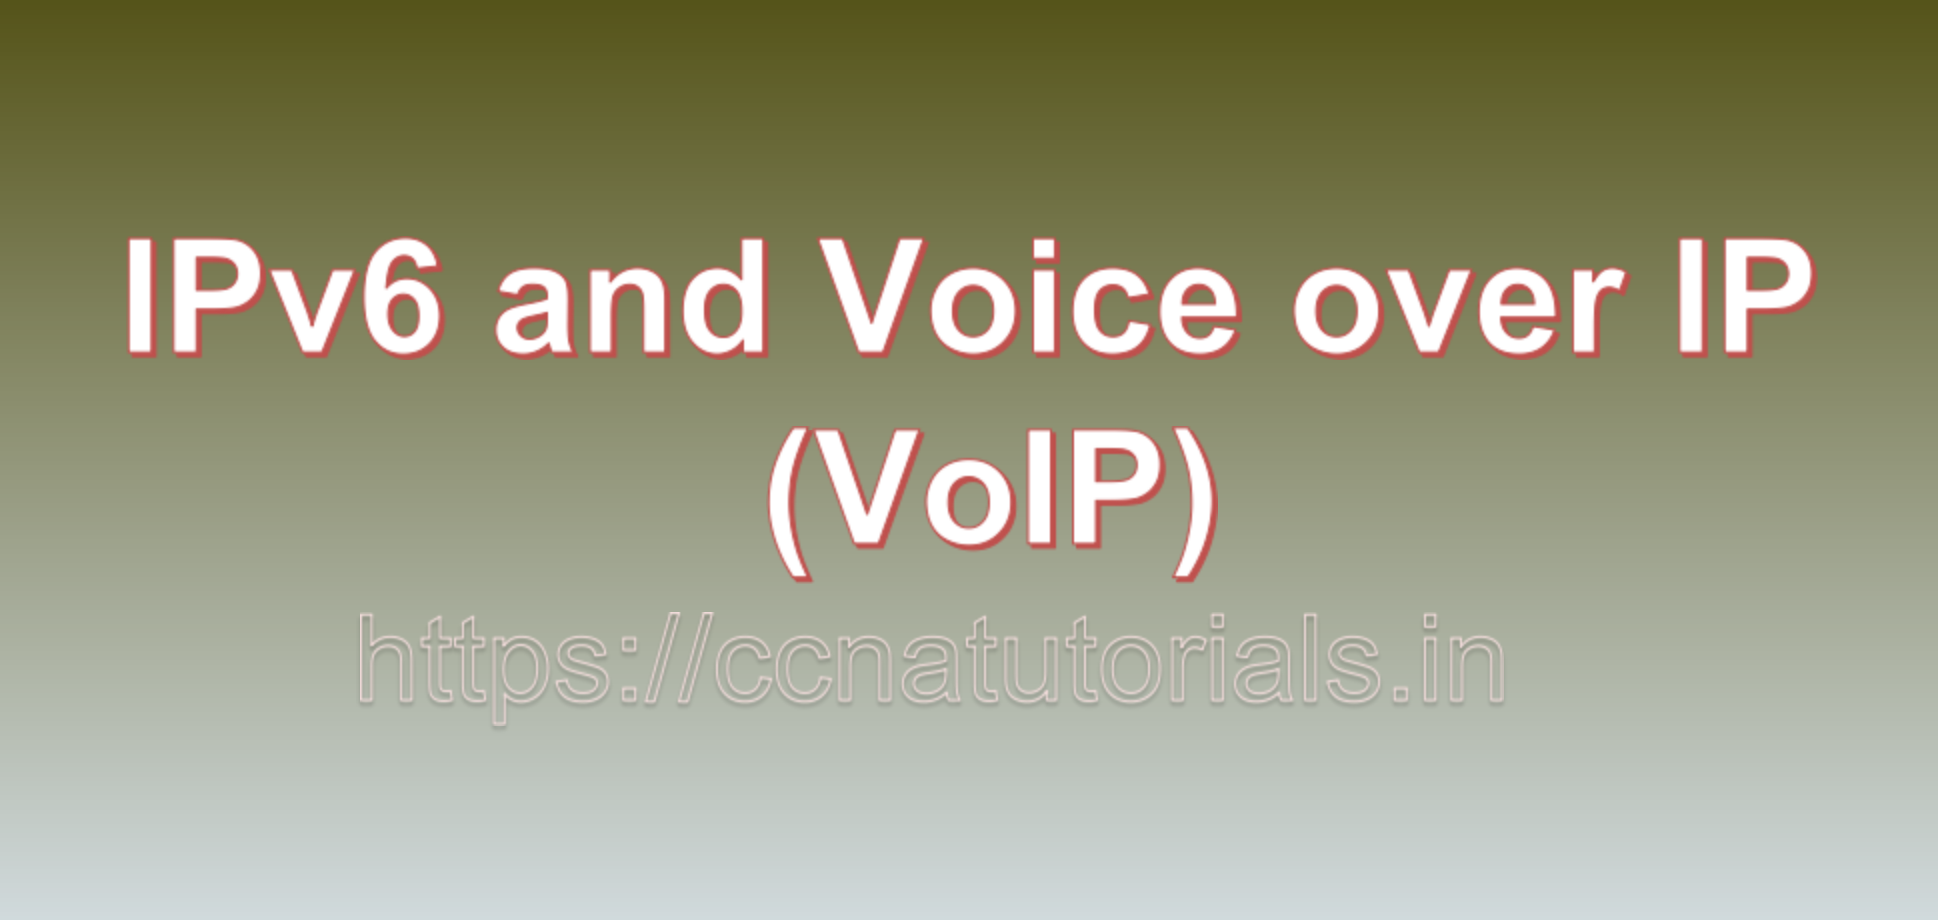 IPv6 and Voice over IP, ccna, ccna tutorials